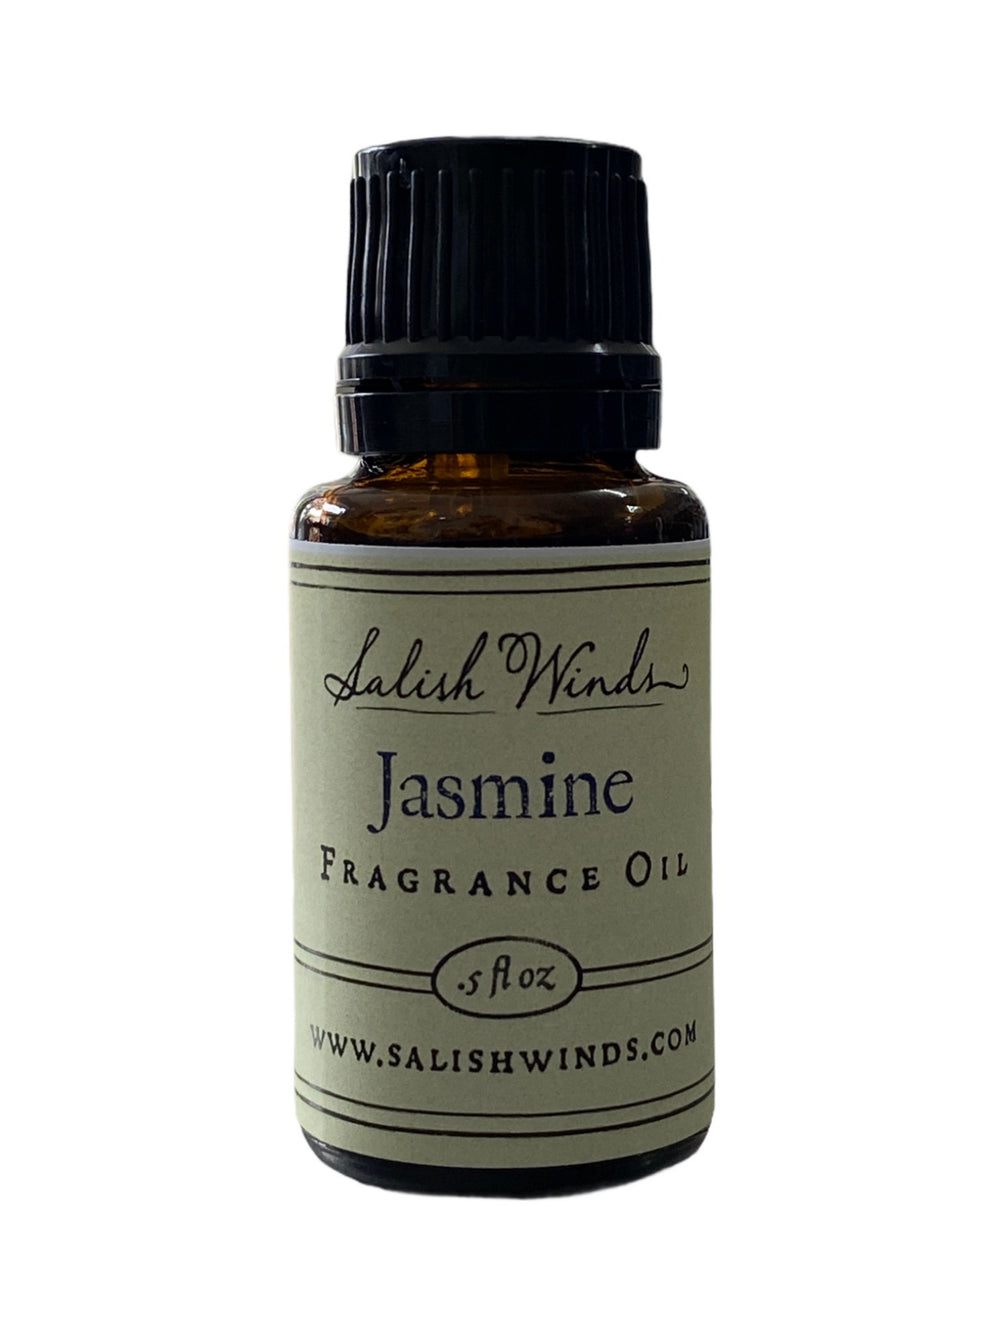 Salish Winds Jasmine Perfume Oil Bottle (Life Can Be So Nice) NPG Music Club Prince